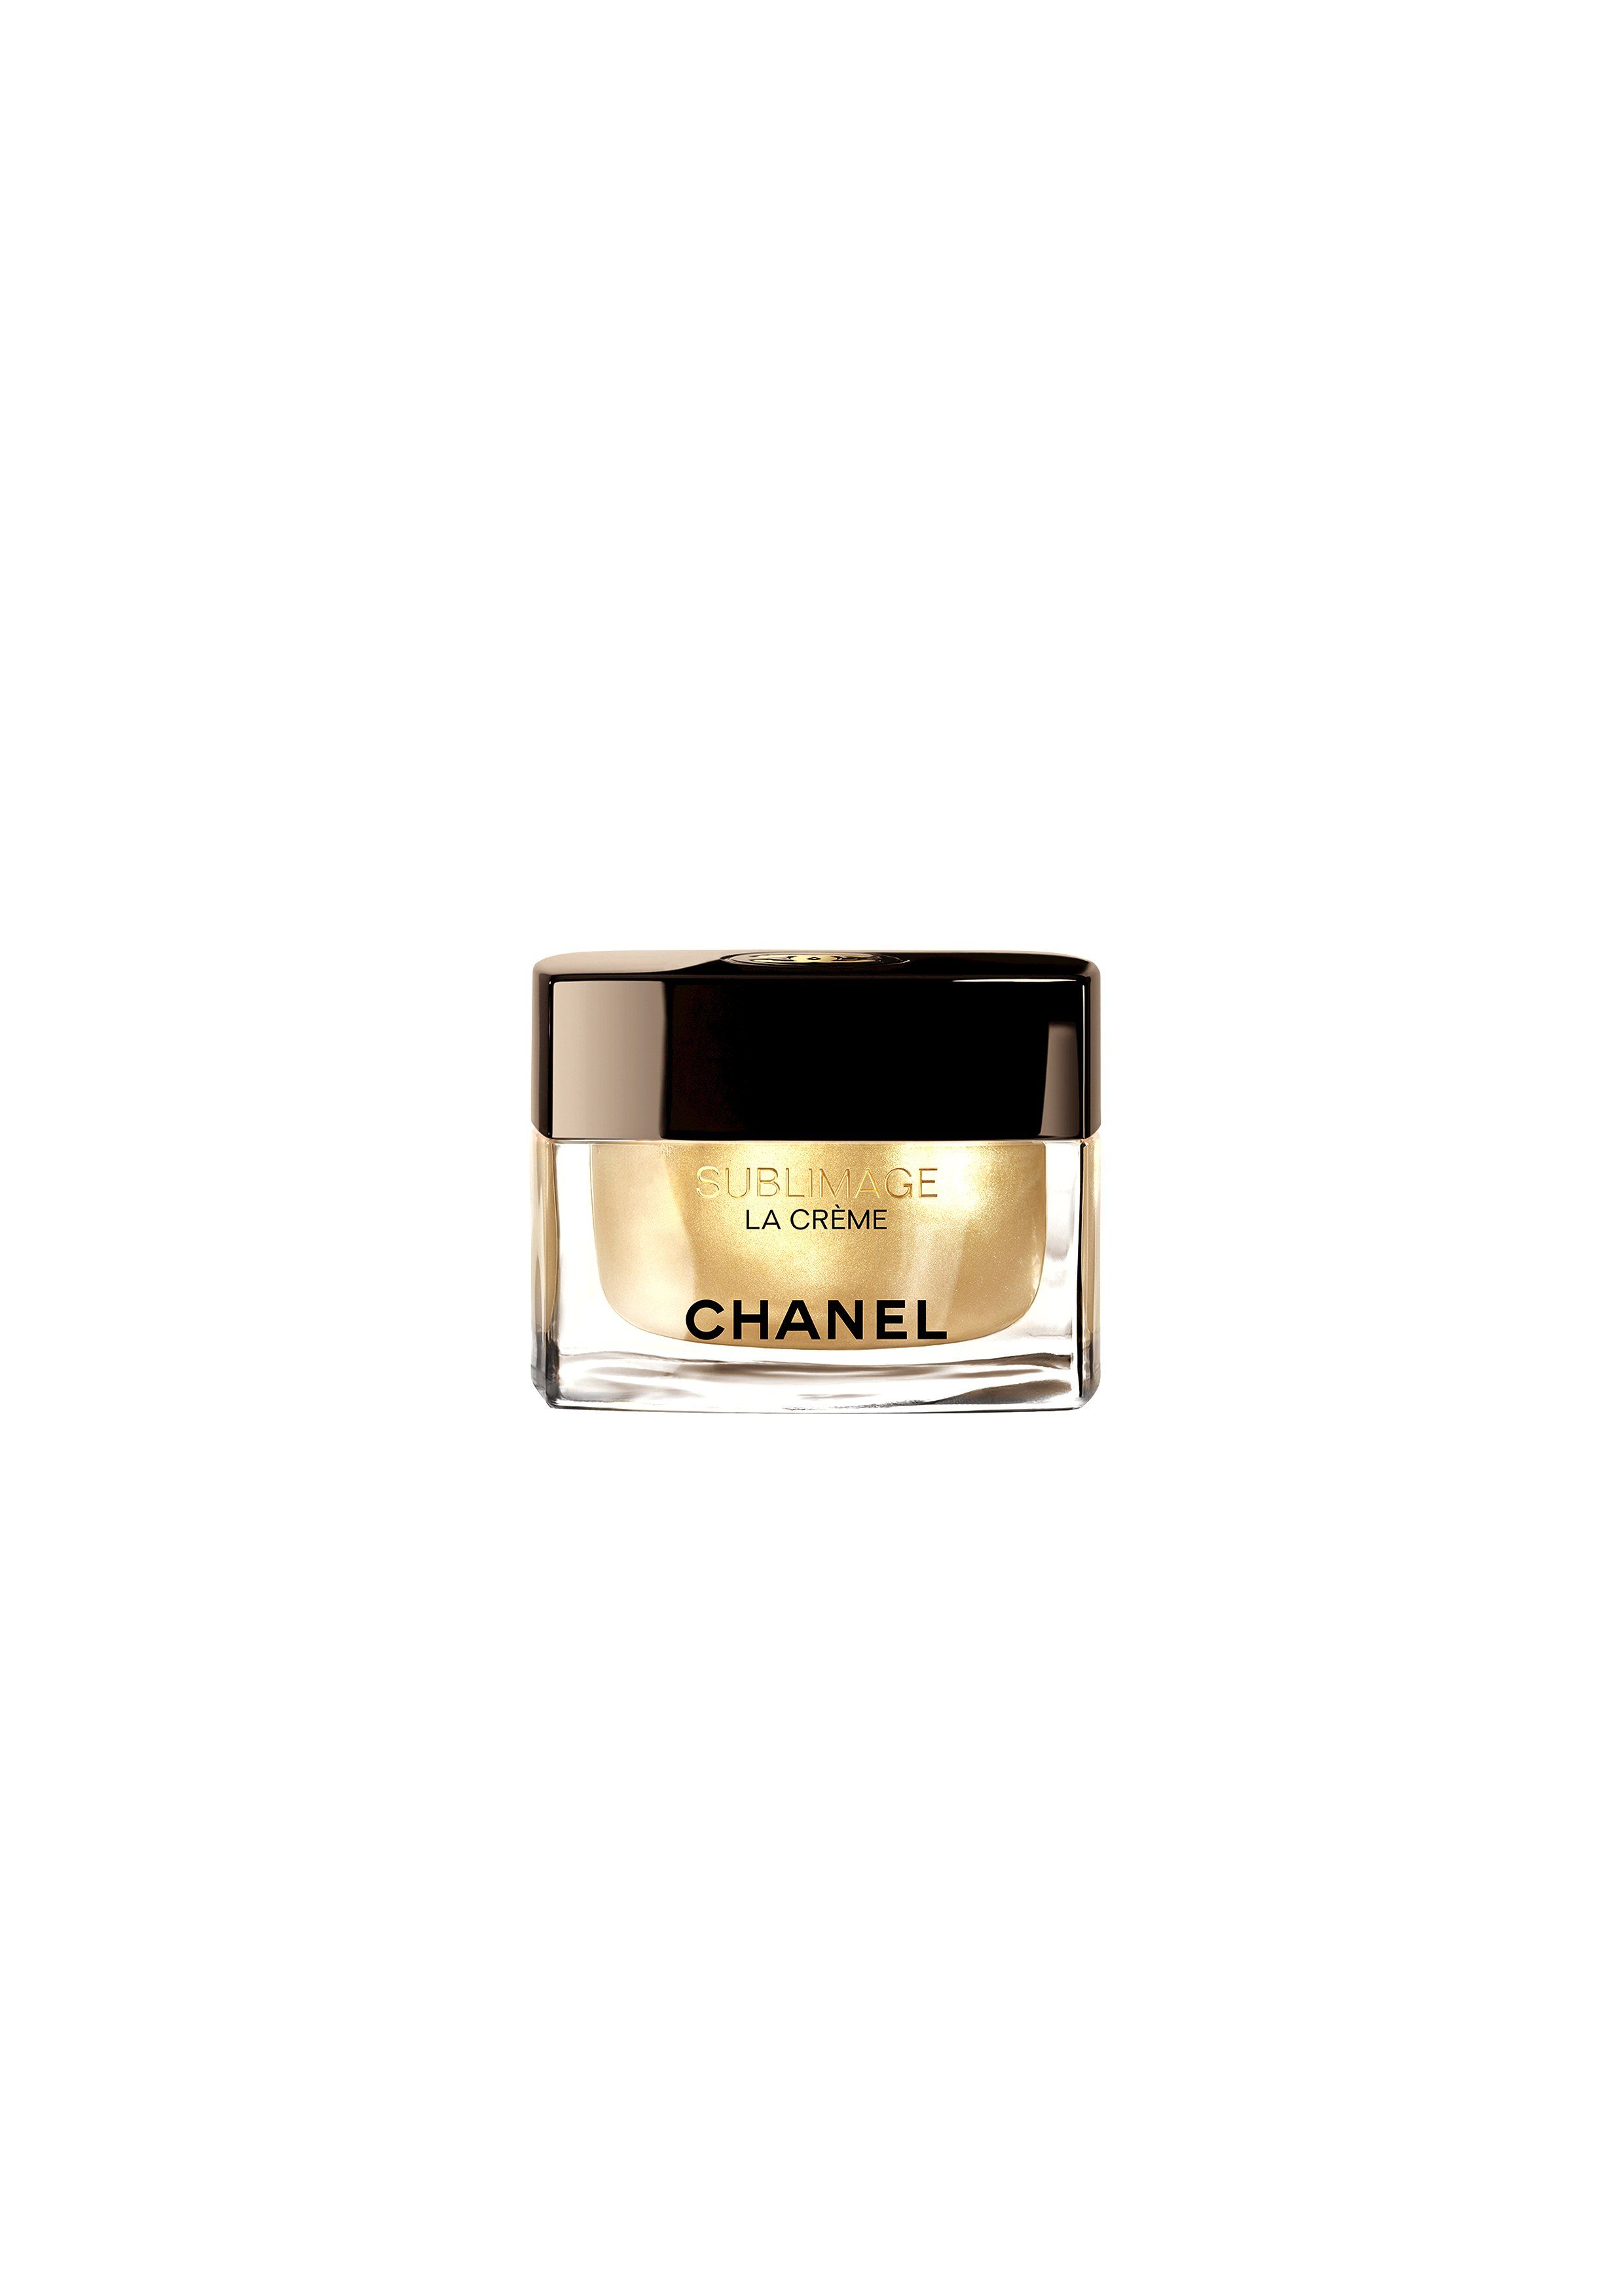 Sublimage La Crème, Chanel, 50 g. CHF 400.-